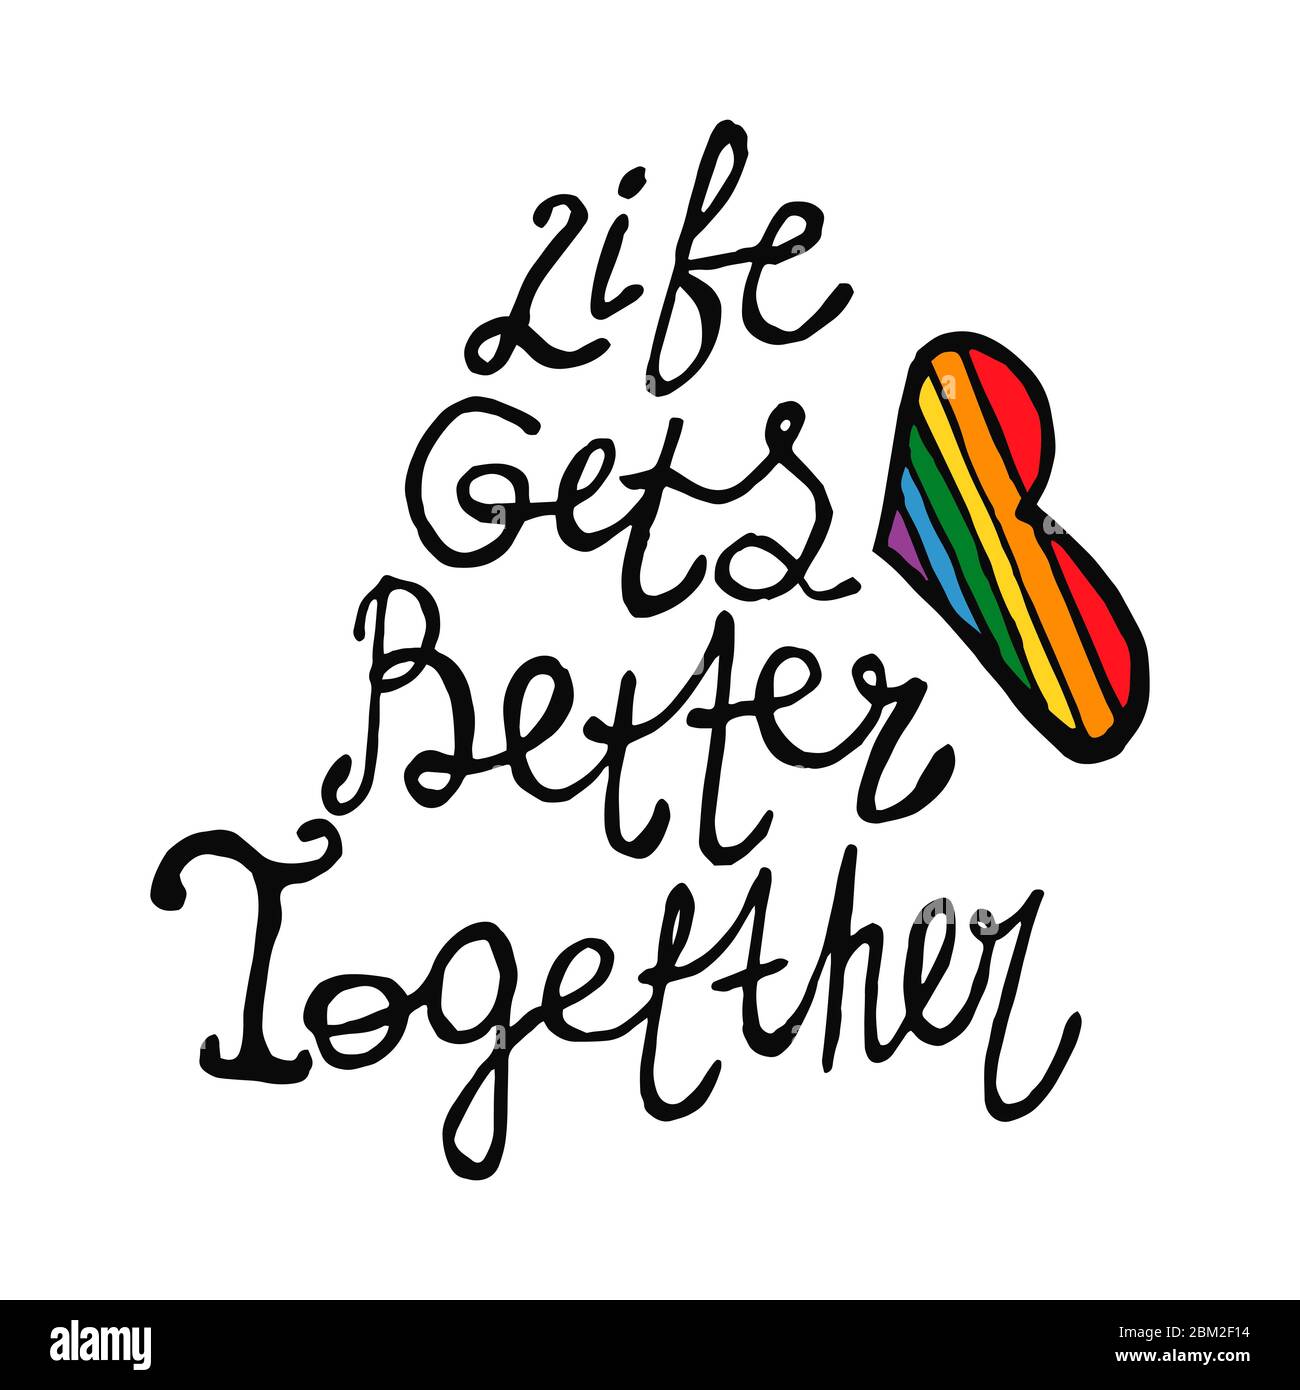 Lettering Text in Doodle-Stil - Leben, wird, besser, together.Hand geschrieben Stolz, Liebe, Frieden Schriftzug mit rainbow.Gay Parade Slogan.LGBT Rechte Symbol Stock Vektor